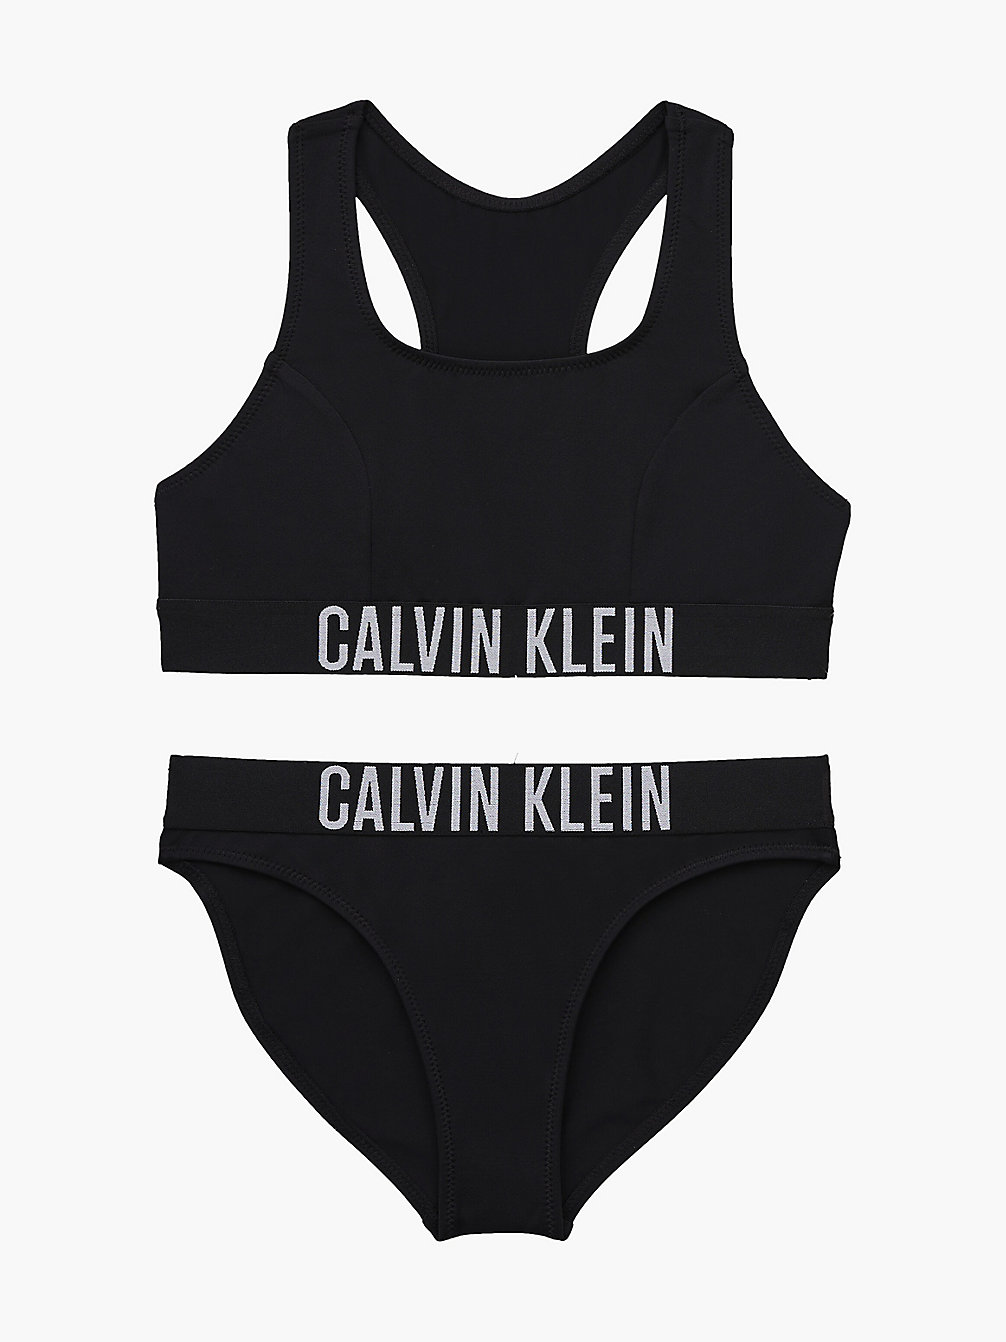 PVH BLACK Girls Bralette Bikini Set - Intense Power undefined girls Calvin Klein